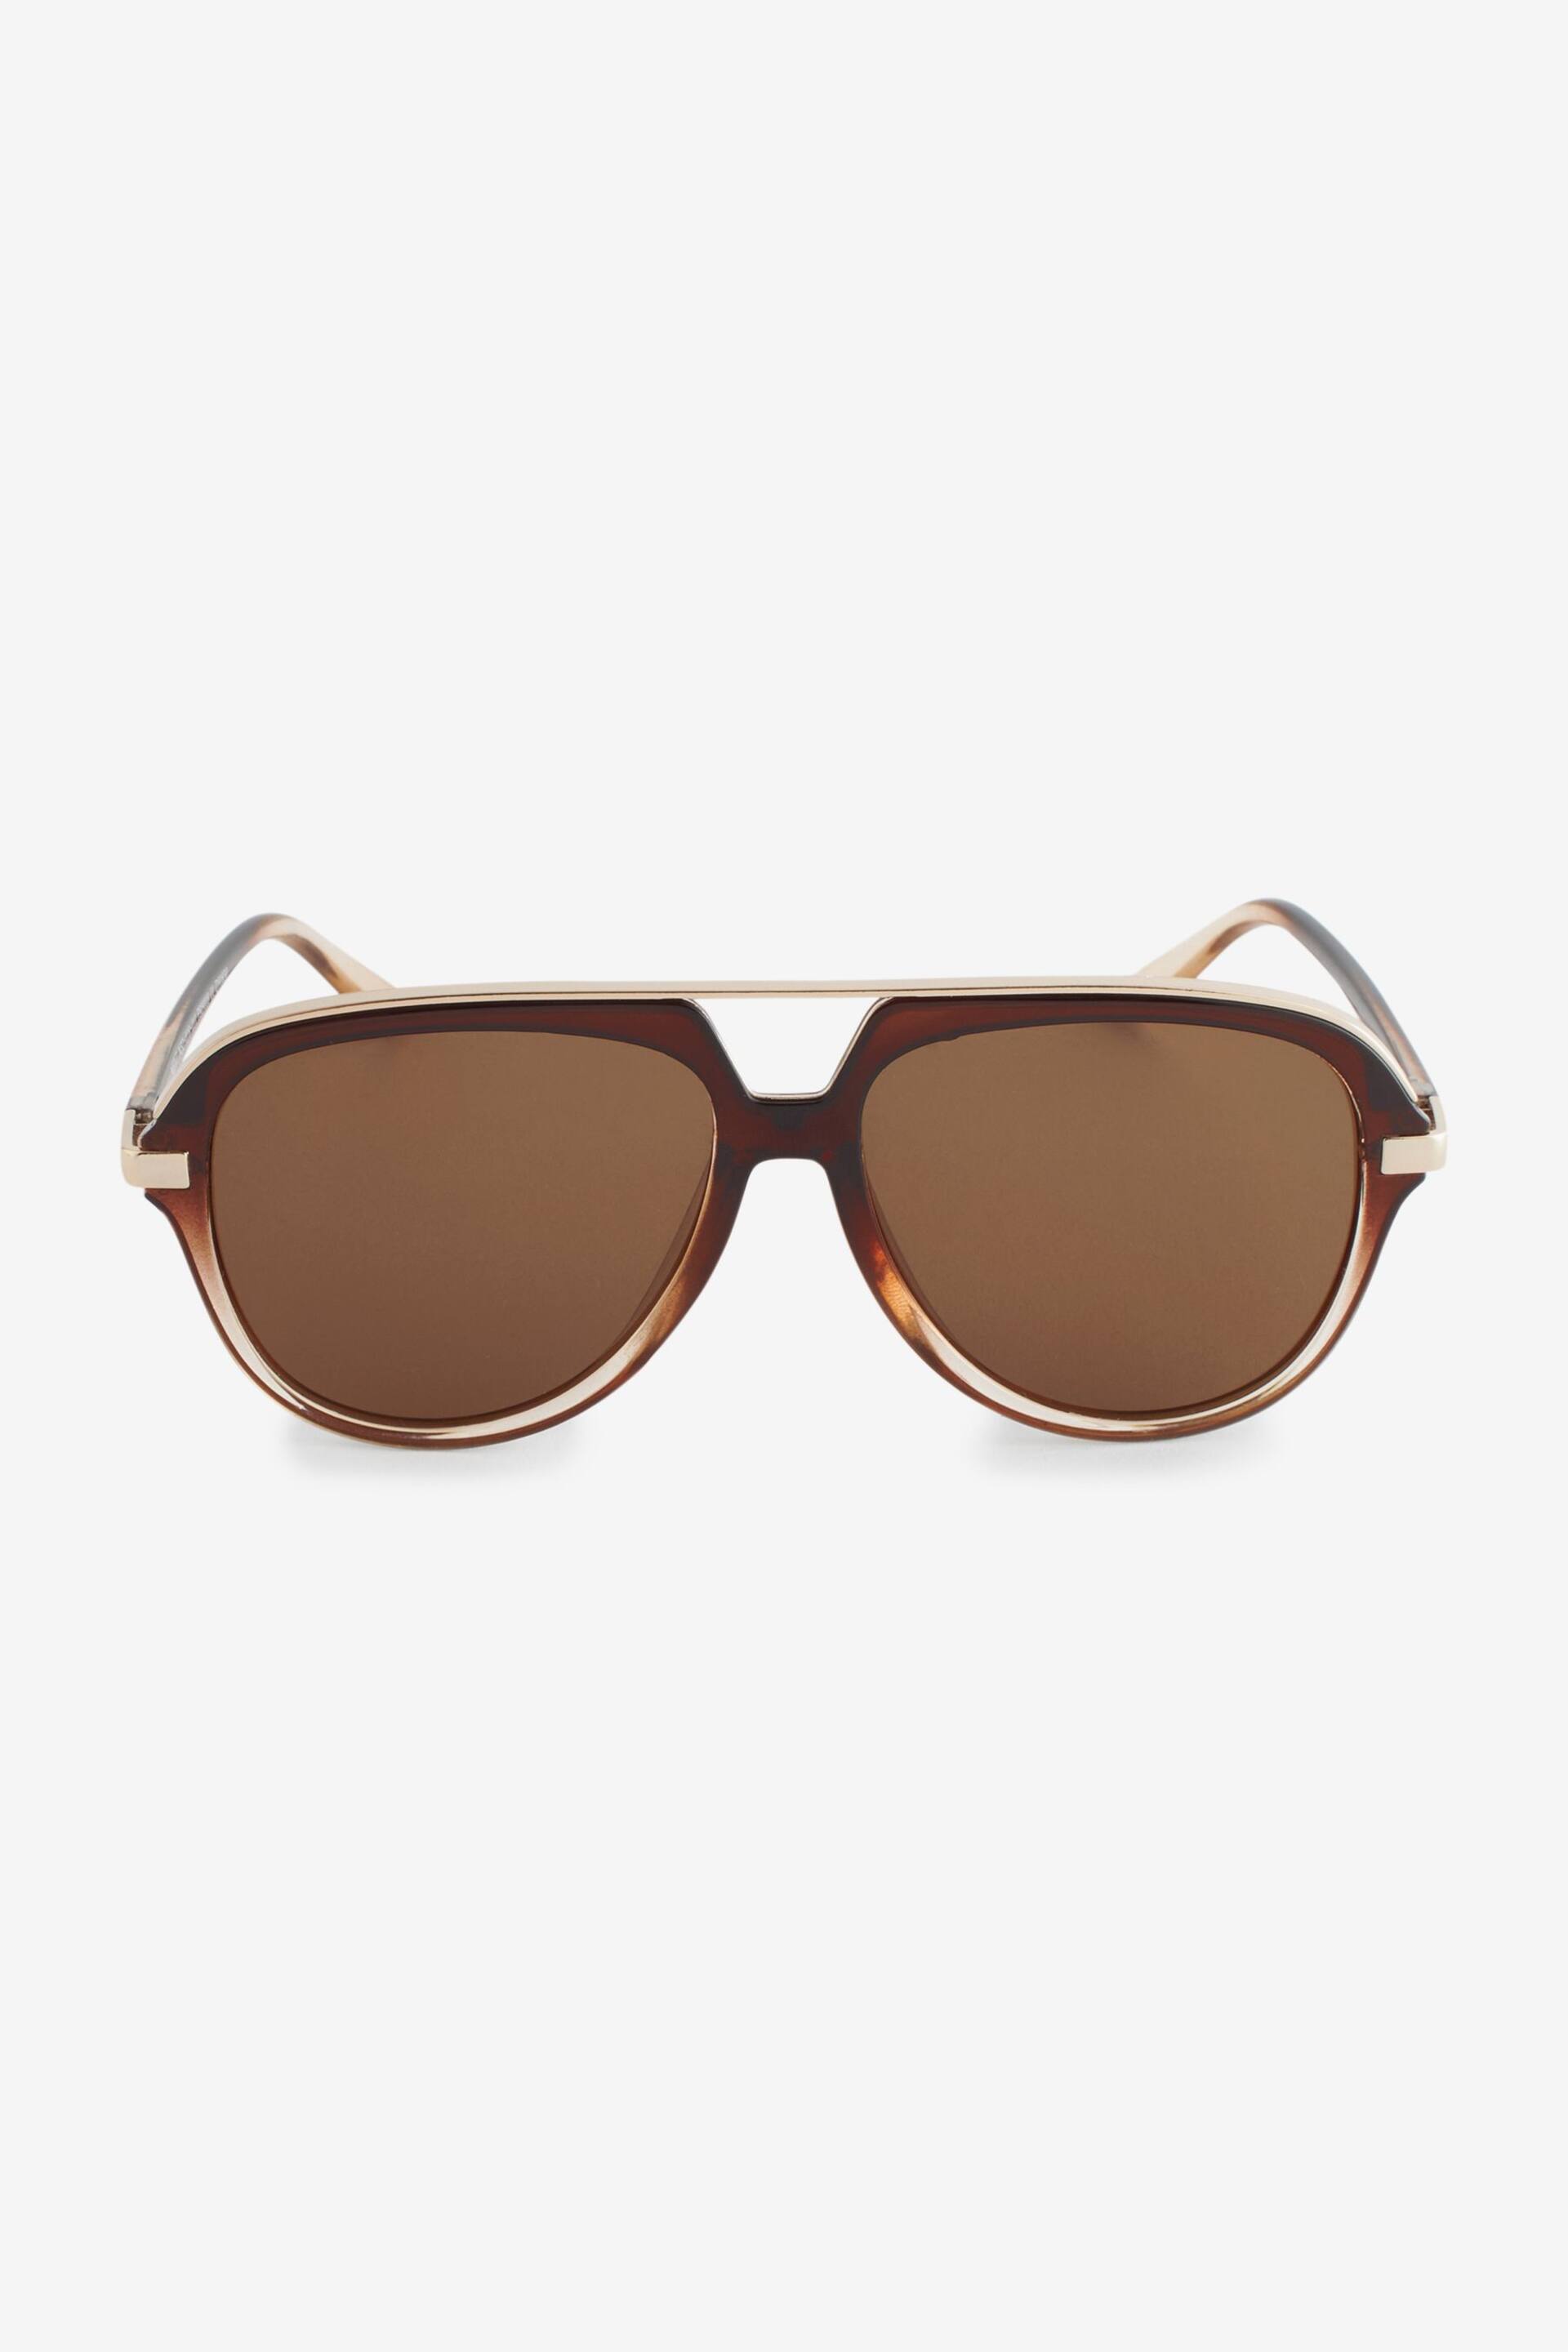 Brown Polarized Plastic Metal Aviator Sunglasses - Image 5 of 7